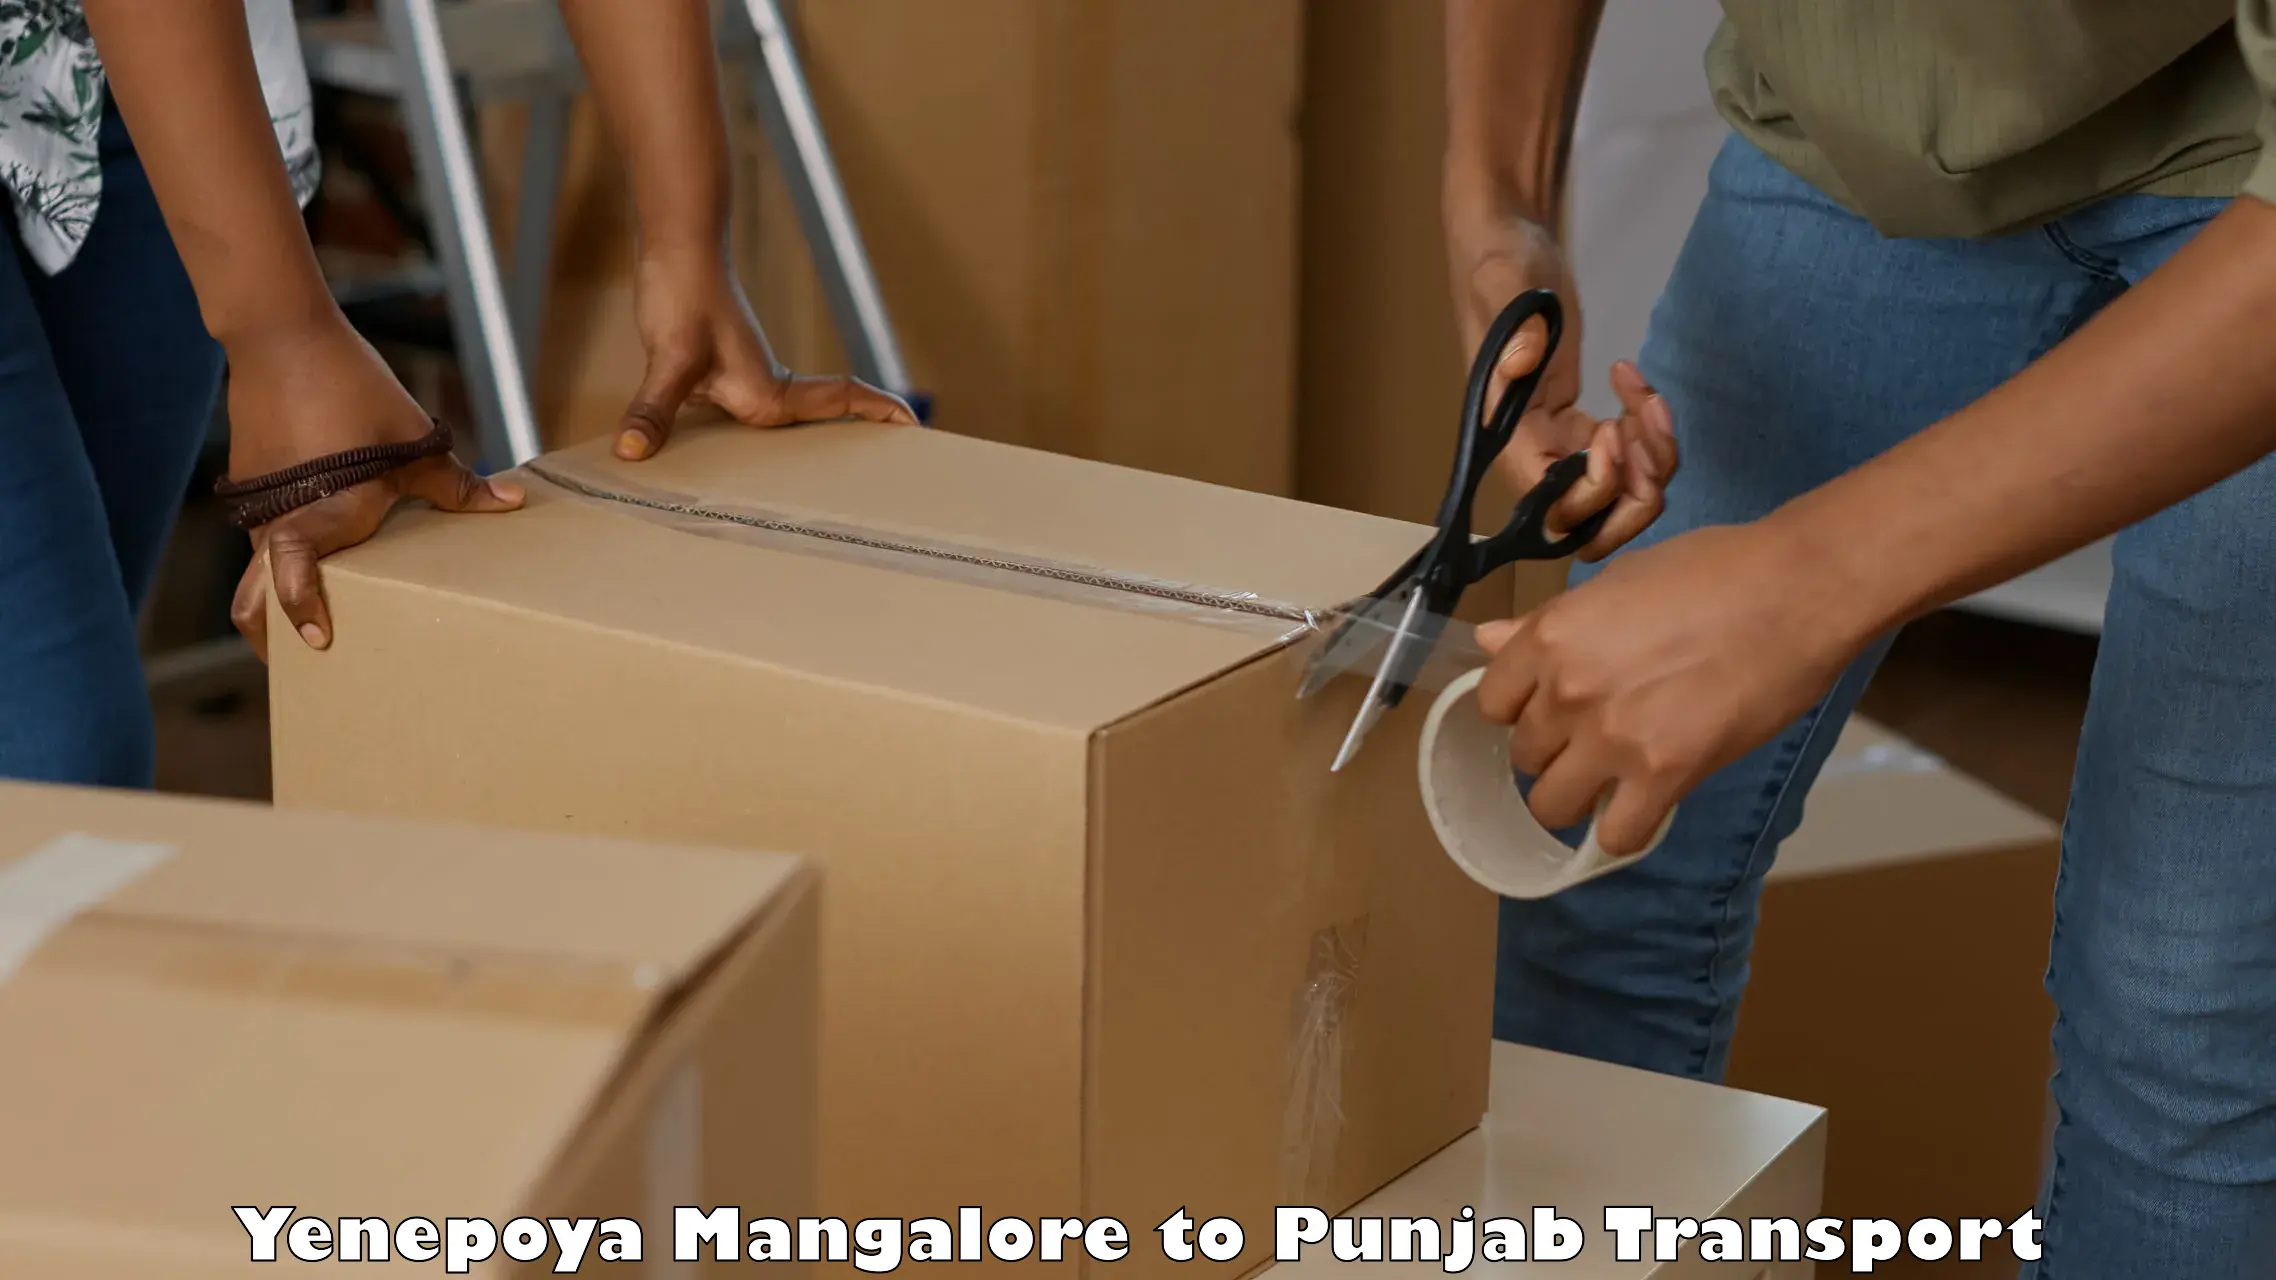 Nearby transport service Yenepoya Mangalore to Bagha Purana